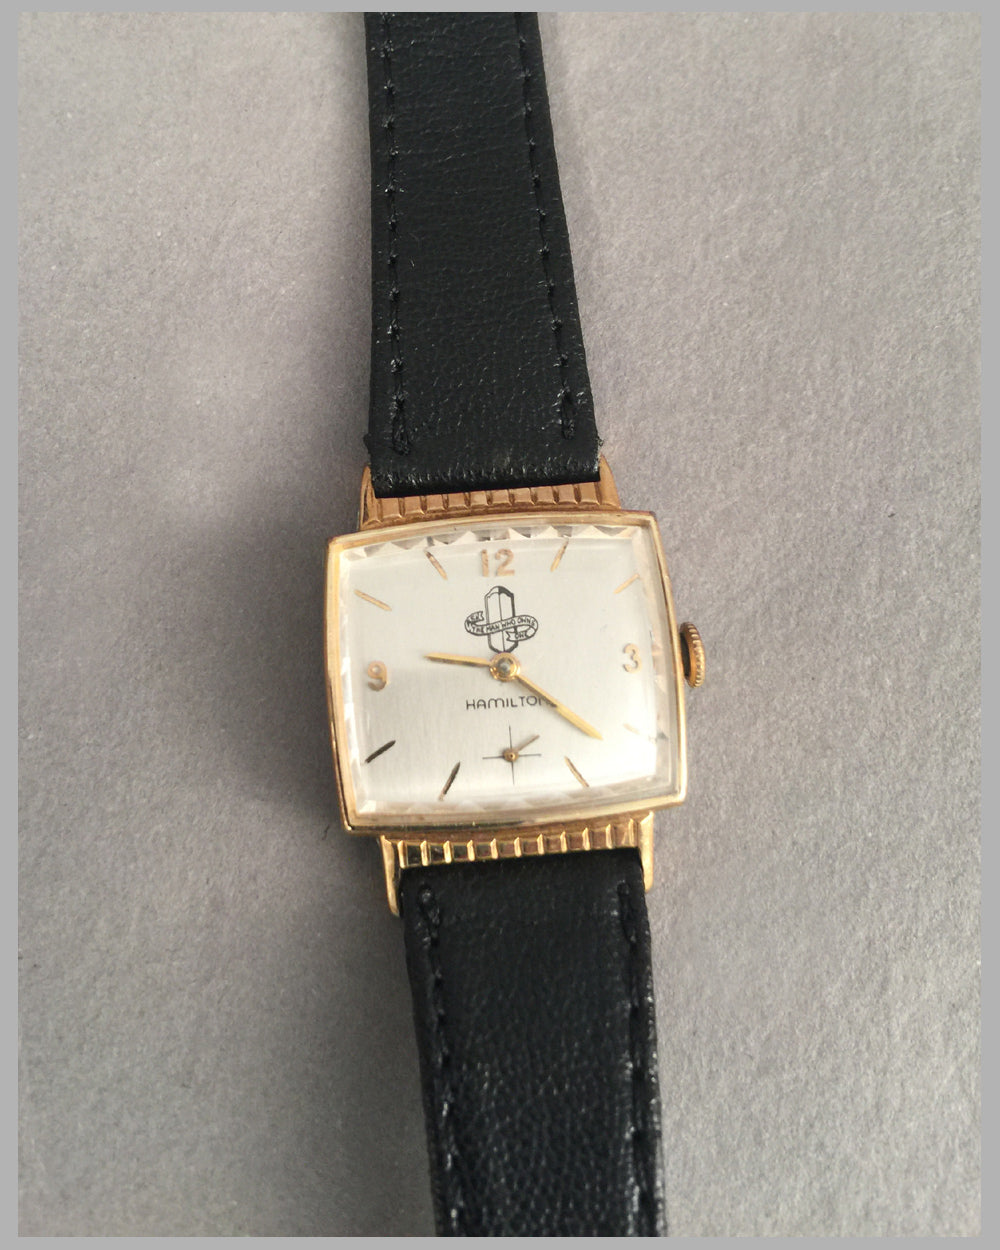 Packard wrist watch By Hamilton, 1948